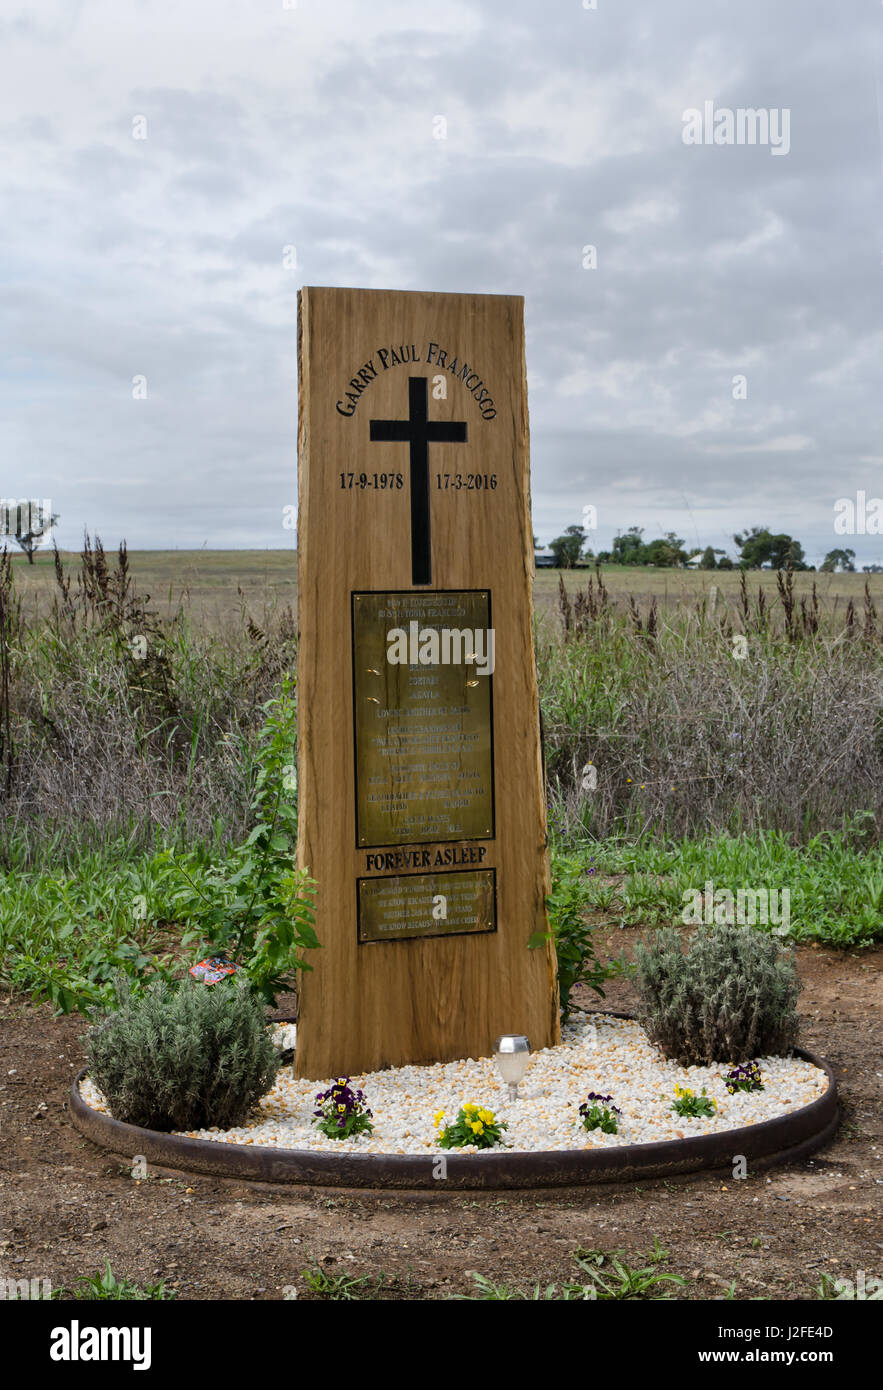 Elaborate Roadside Memorial for a Traffic Crash Victim near Tamworth Australia. Stock Photo